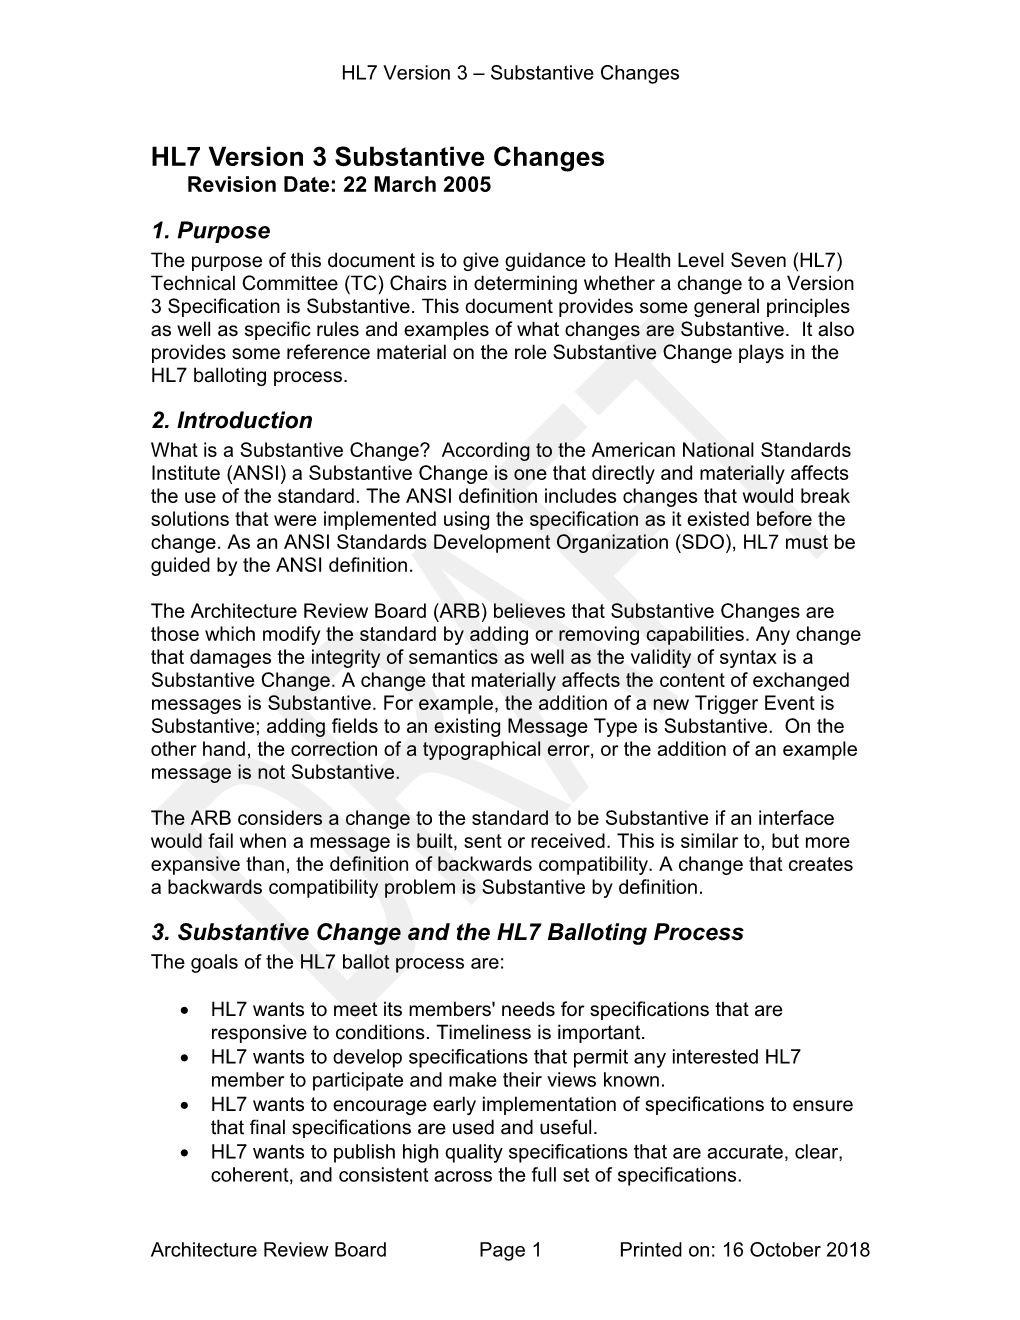 HL7 Version 3 Substantive Changesrevision Date: 22March 2005